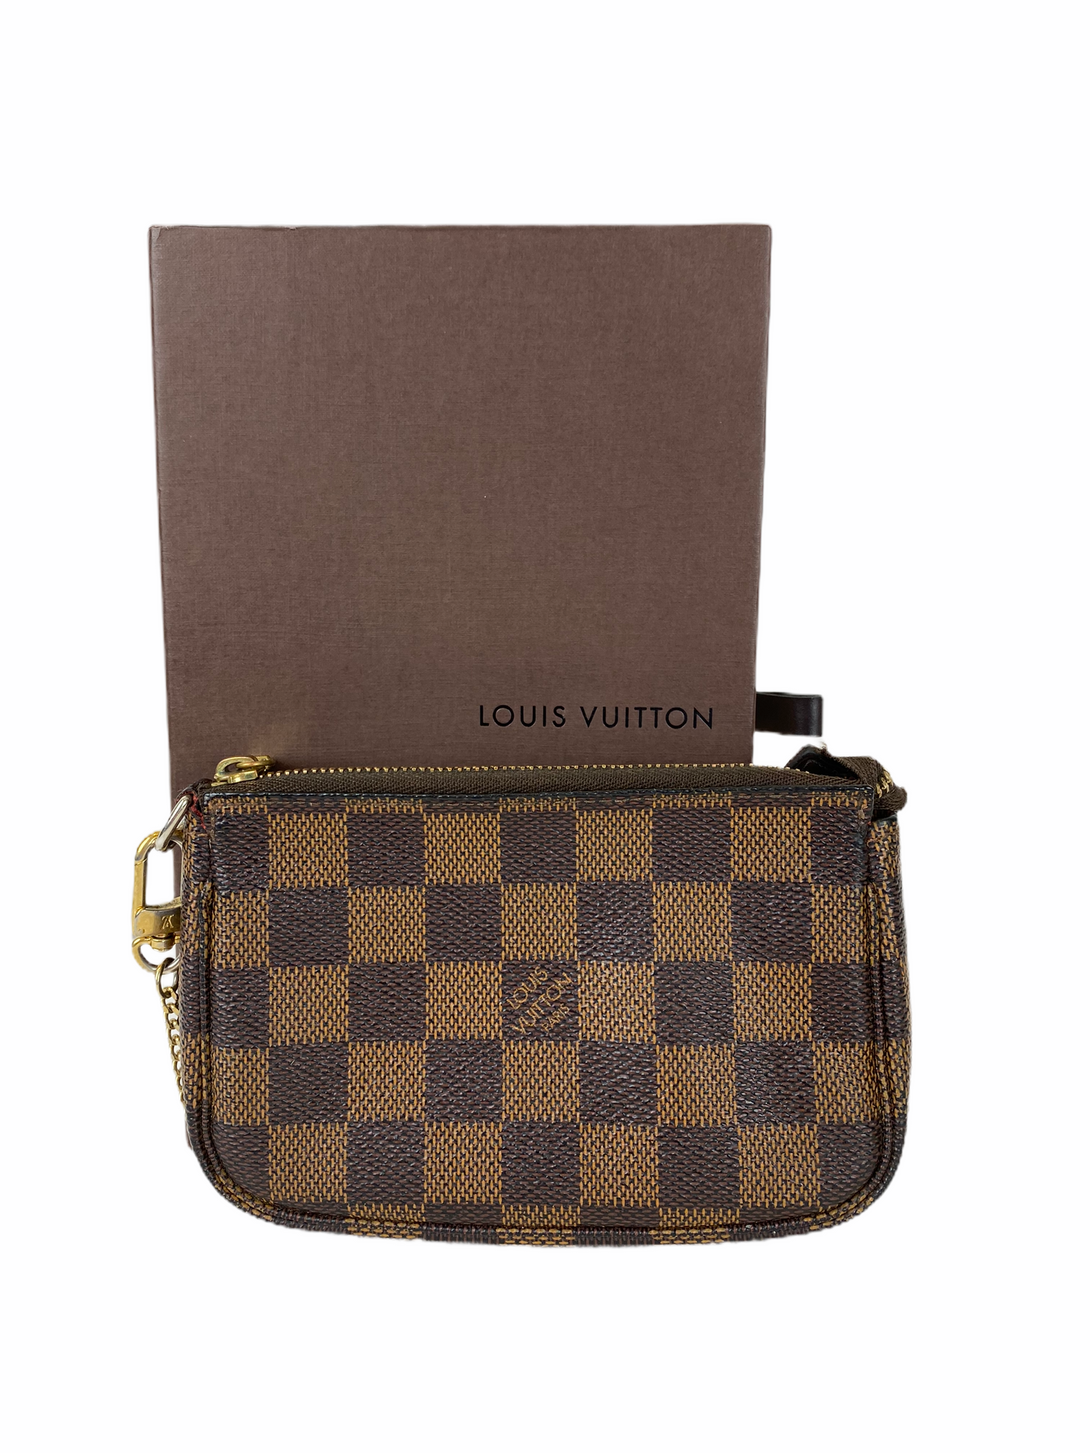 Louis Vuitton Damier Ebene Mini Pochette - As Seen on Instagram 19/08/2020 - Siopaella Designer Exchange